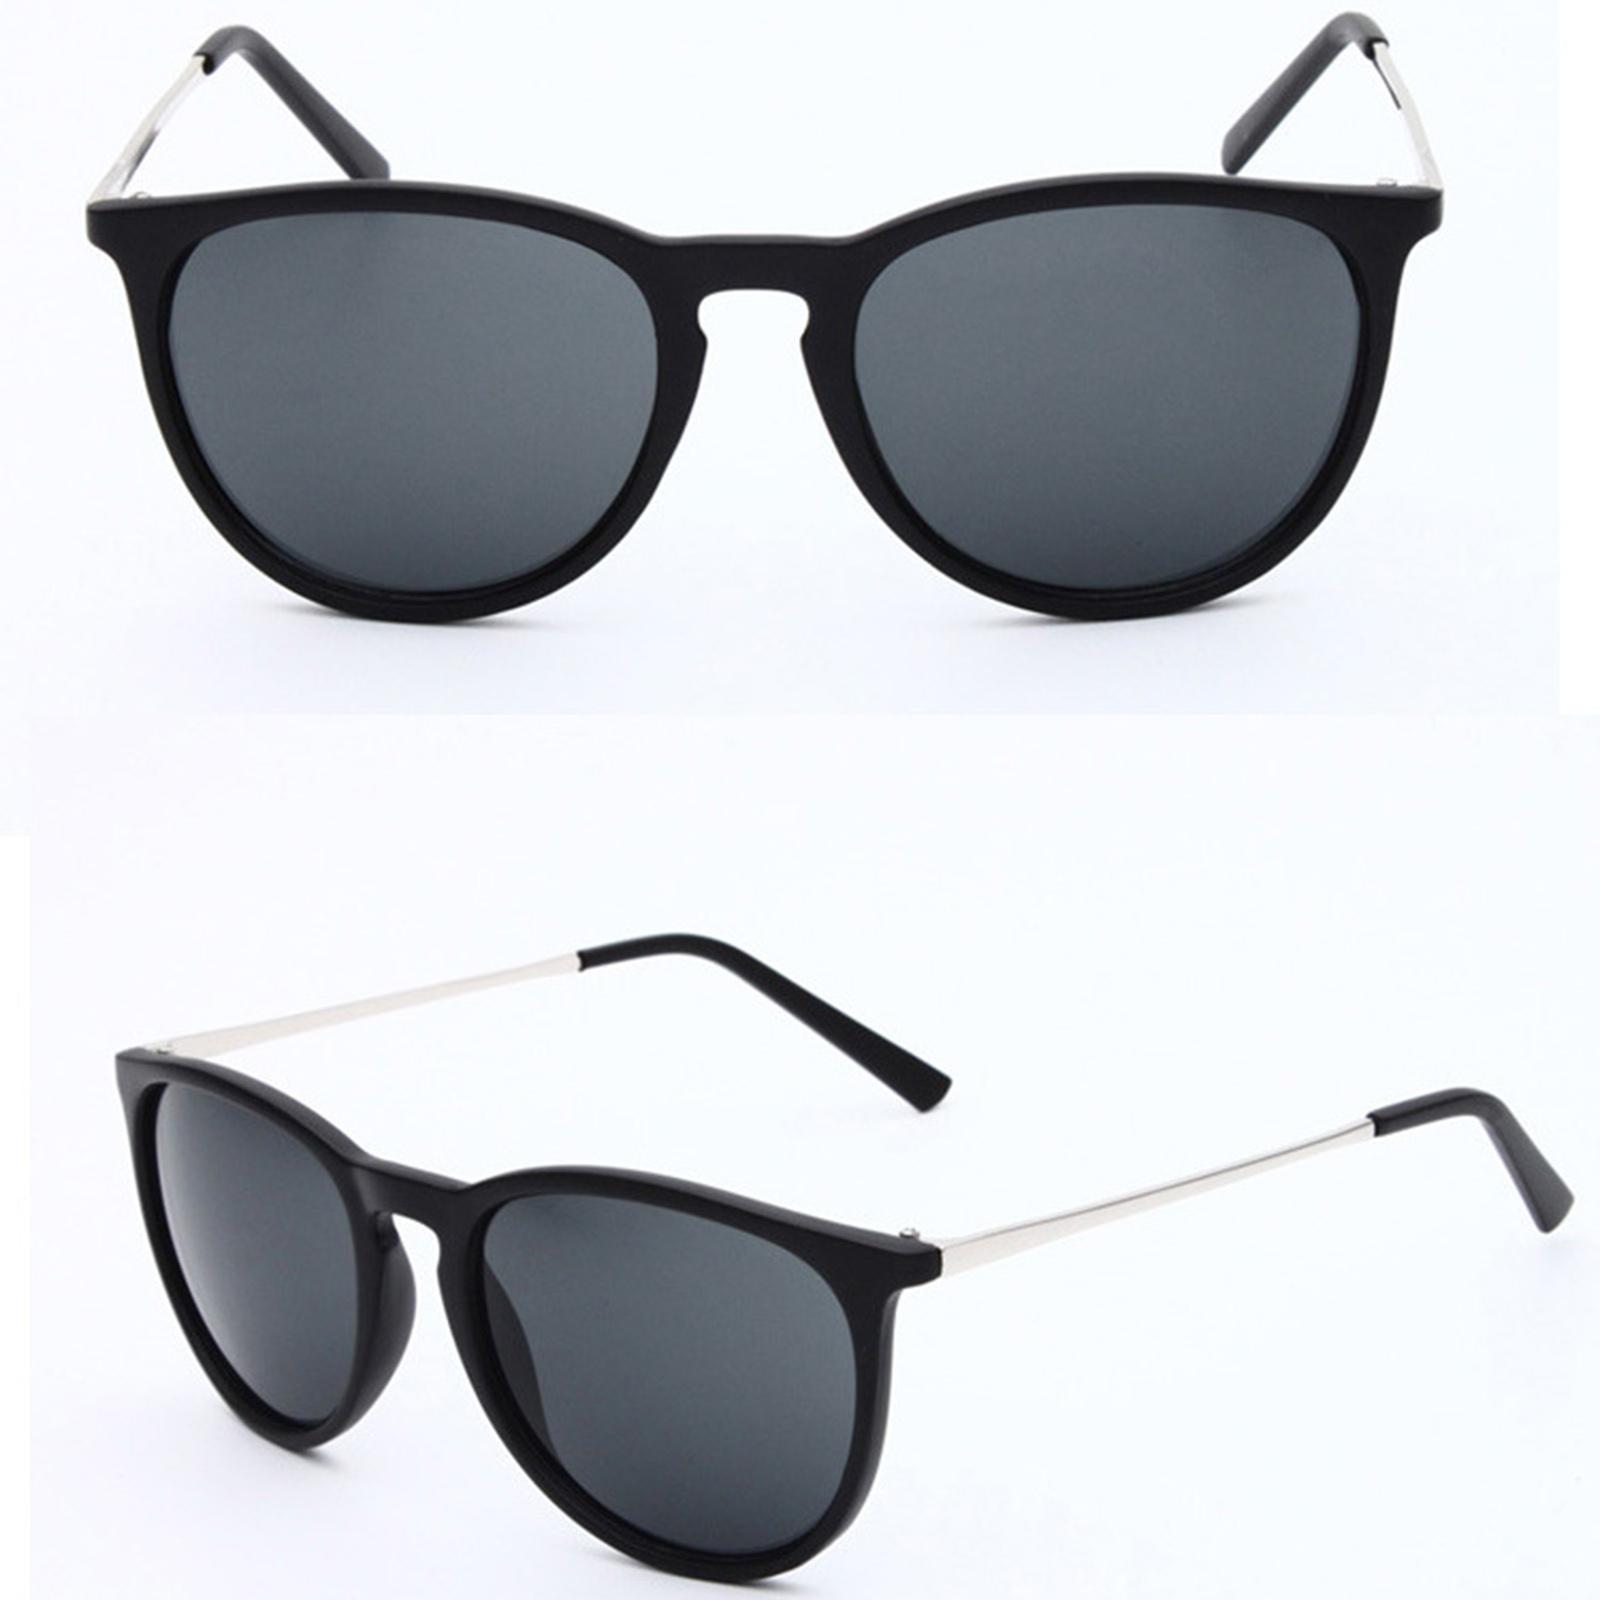 Trendy Sunglasses, Oval Frame Sun Glasses Eyewear UV400 Protection Eyeglasses for Party